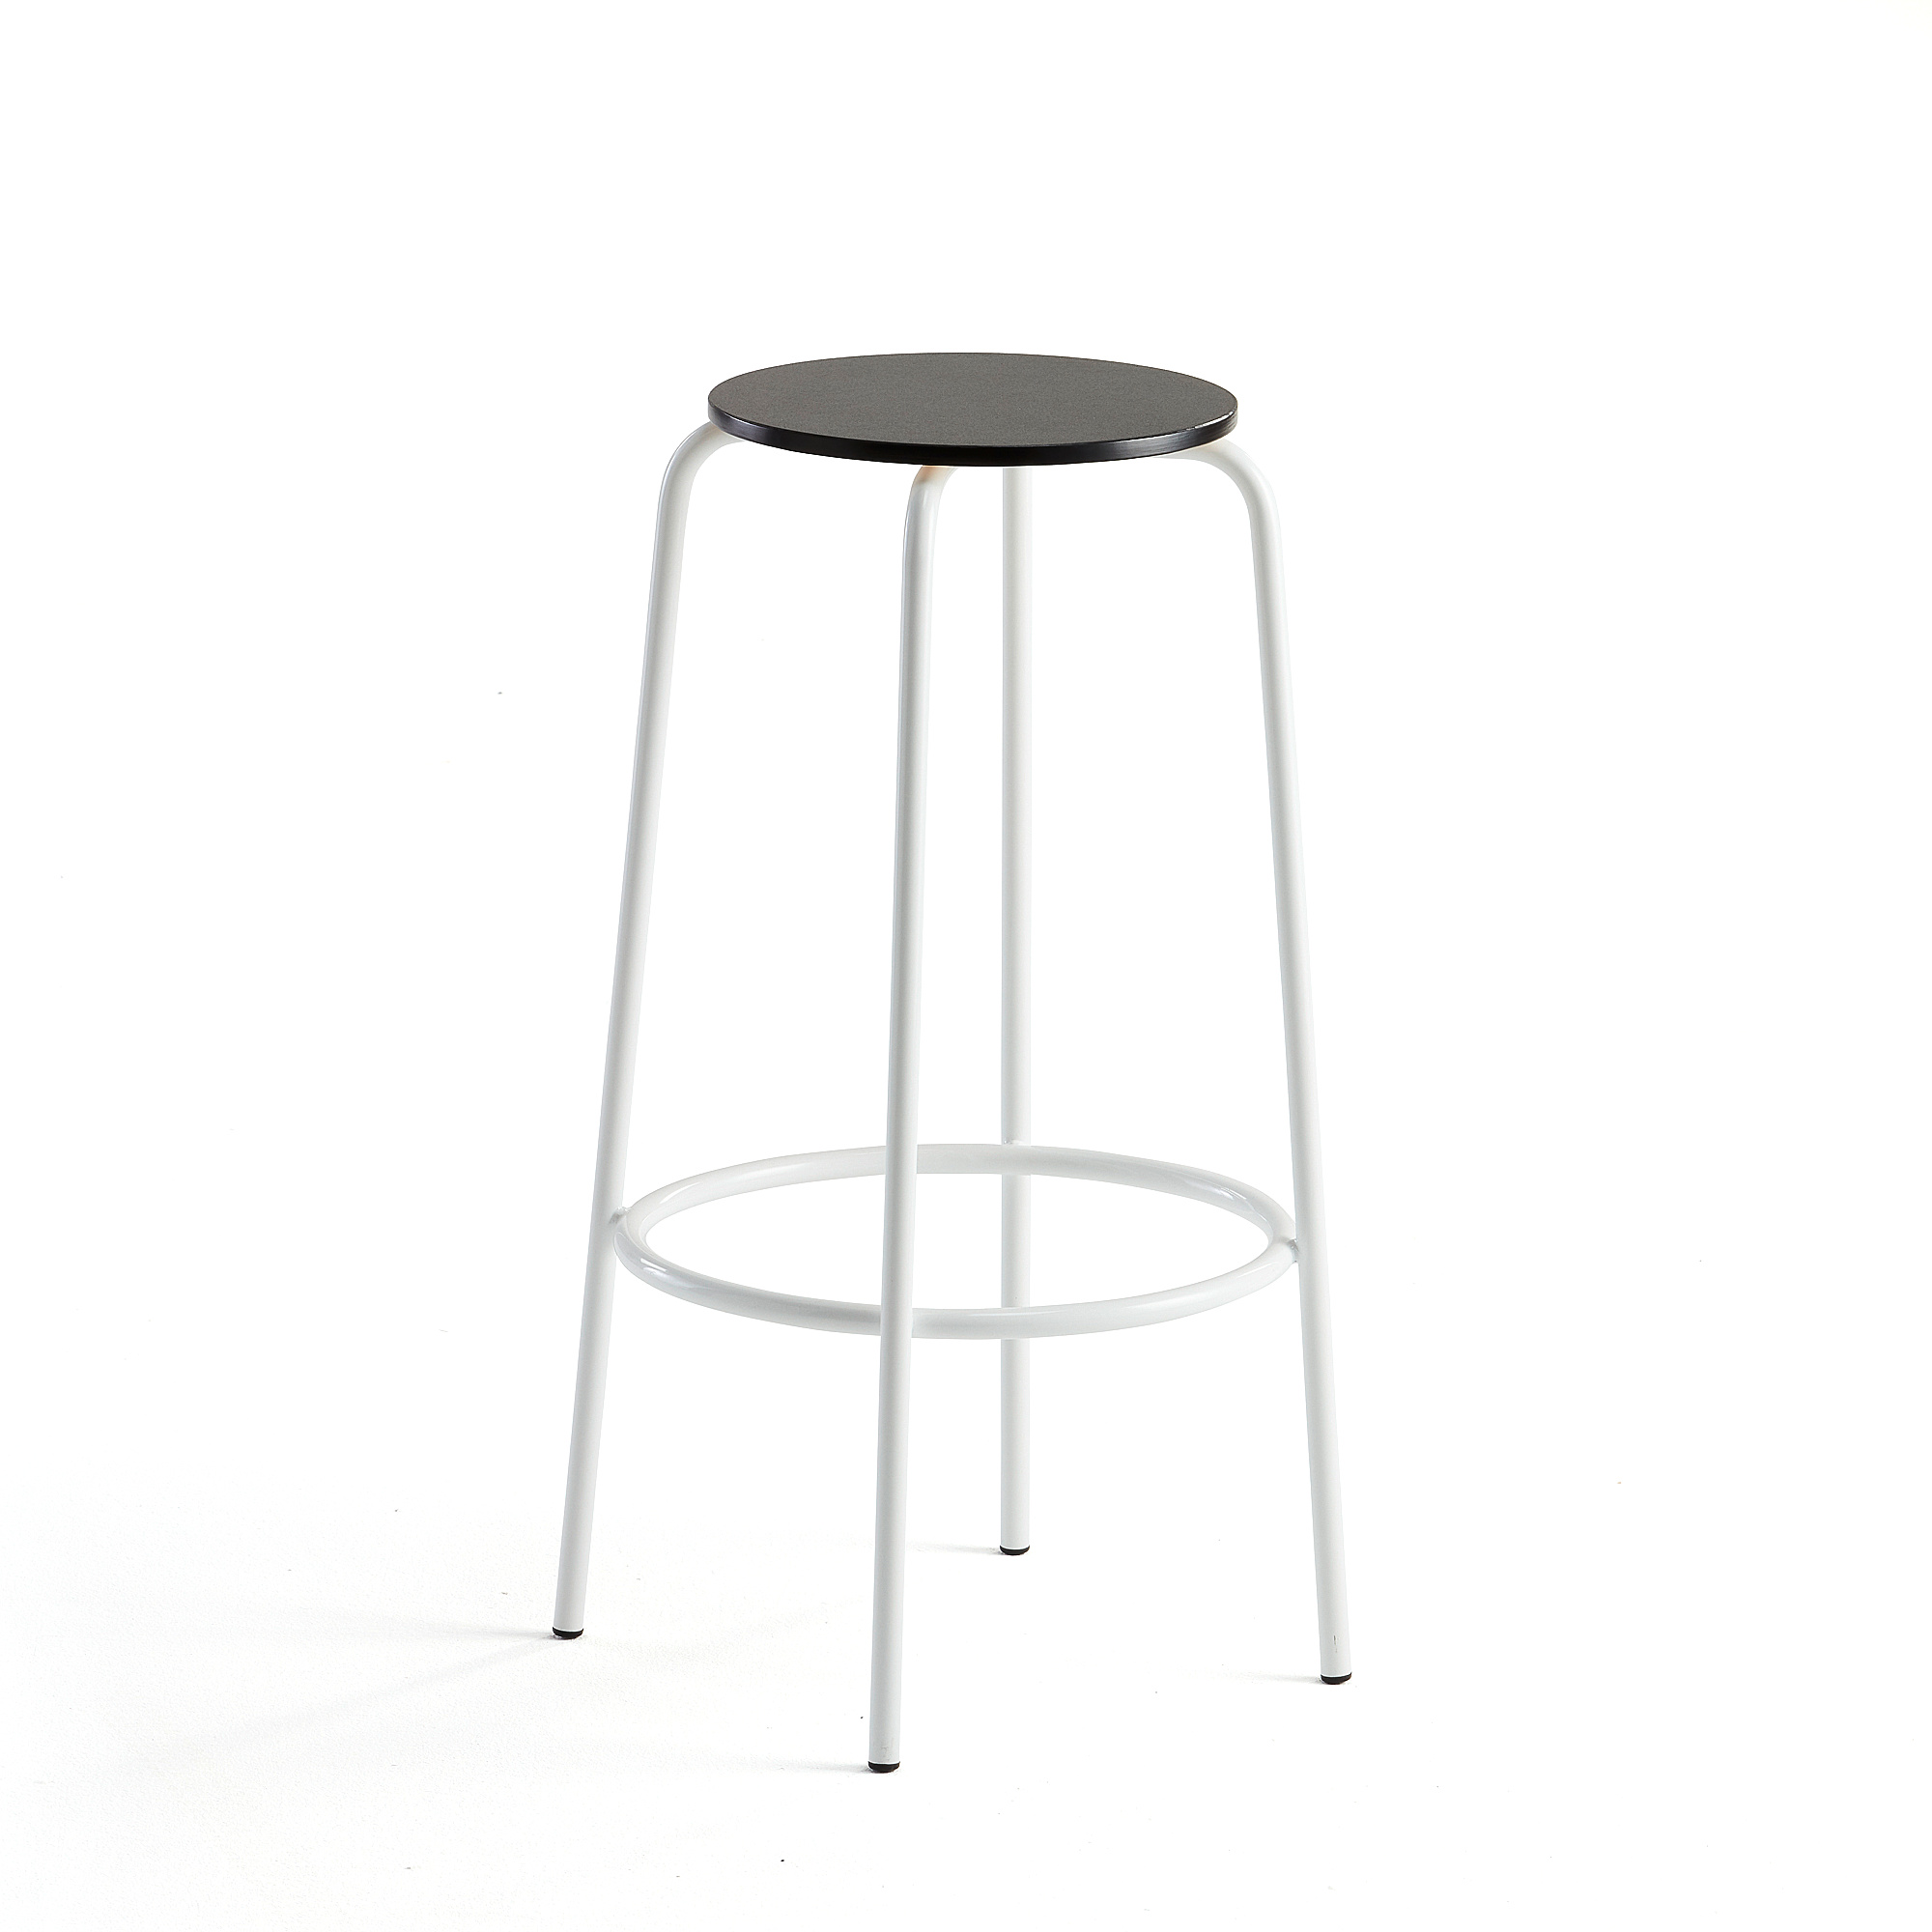 E-shop Barová stolička TIMMY, biely rám, čierny sedák, V 730 mm